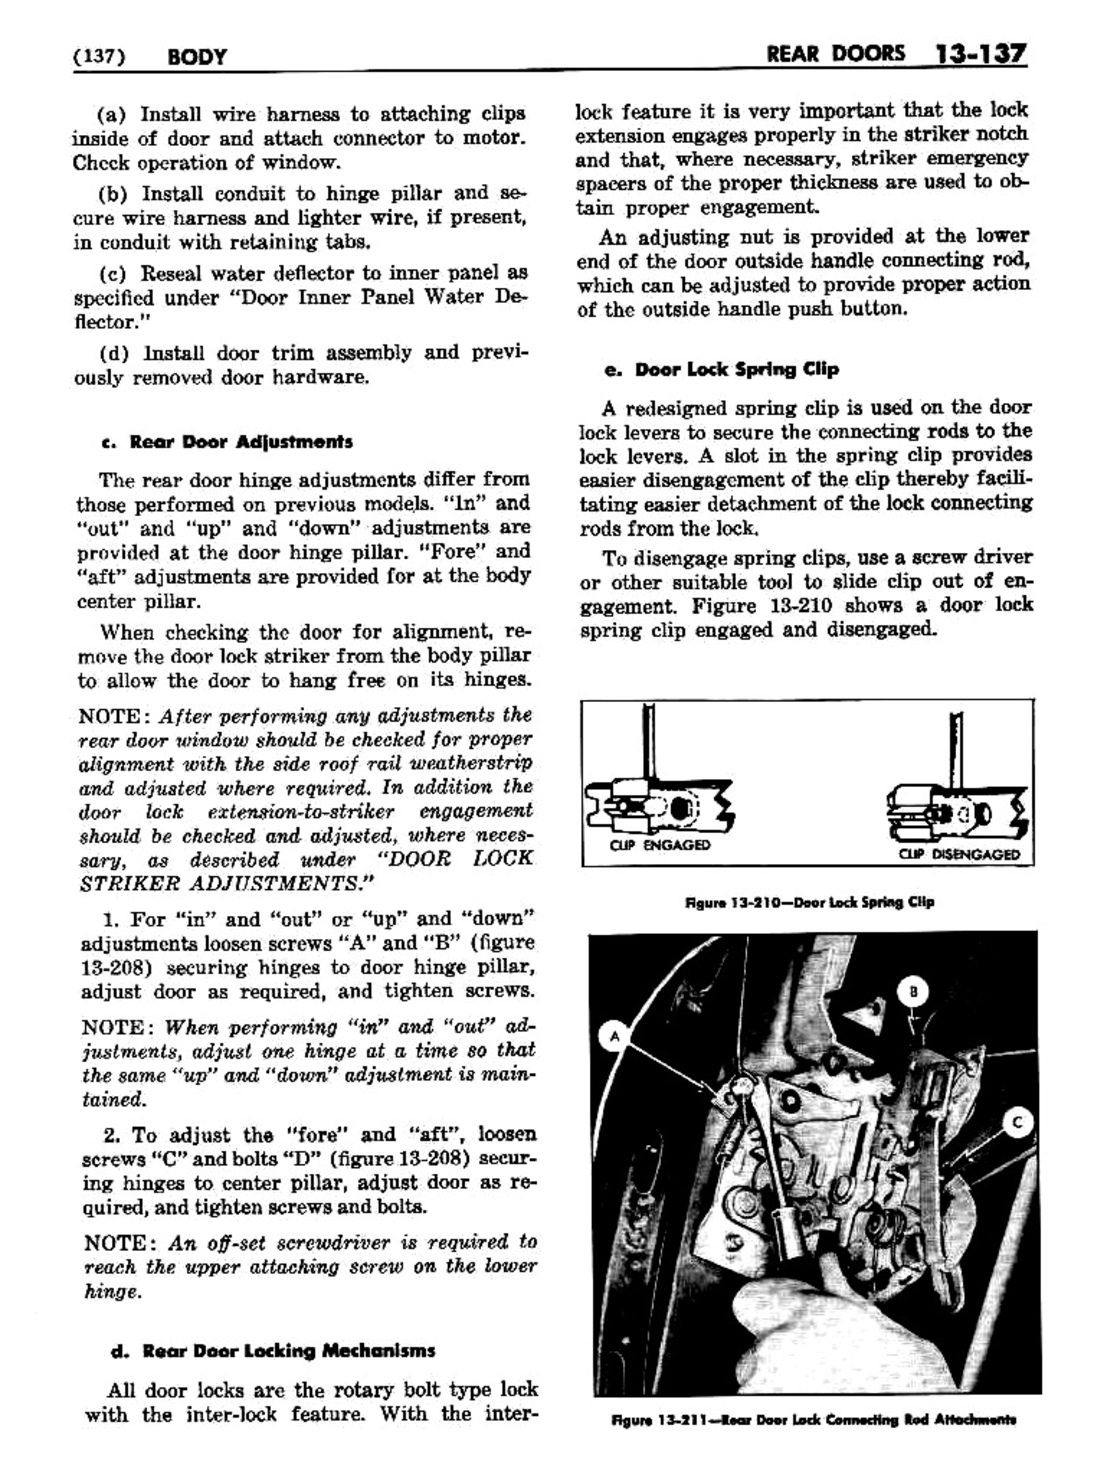 n_1957 Buick Body Service Manual-139-139.jpg